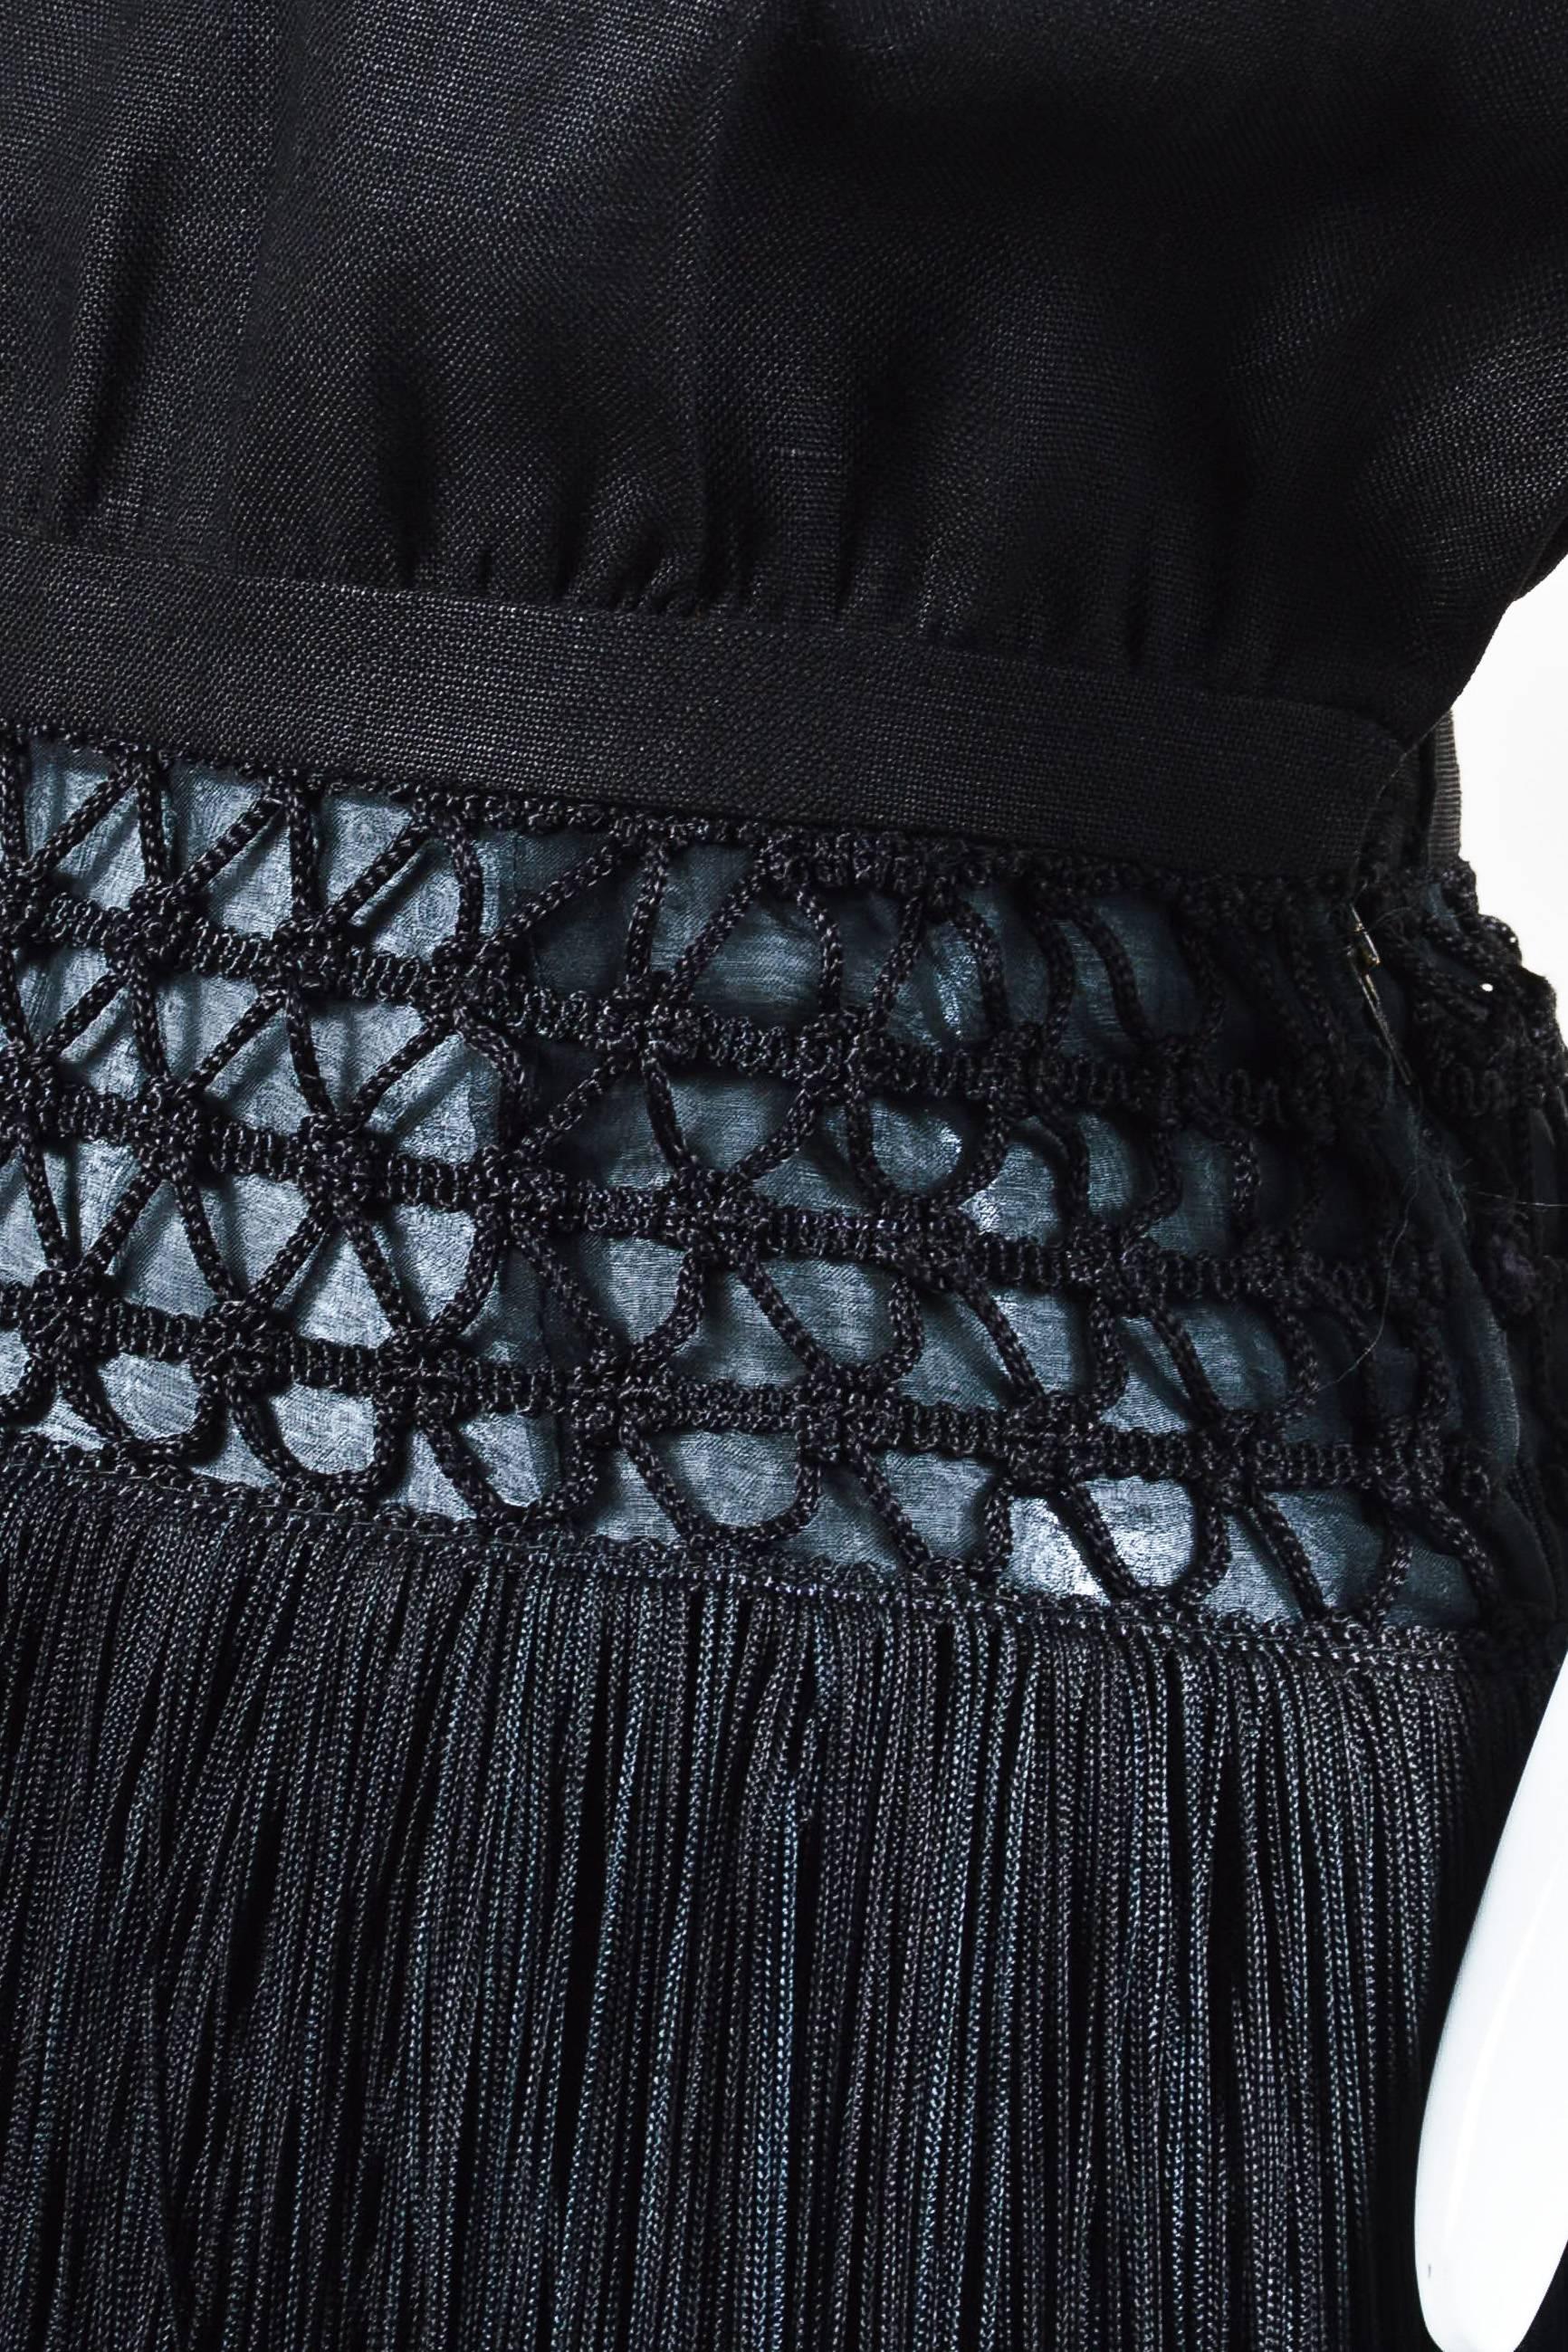 Women's Vintage Valentino Boutique Black Woven Sheer Waist & Fringed Peplum Dress SZ 4